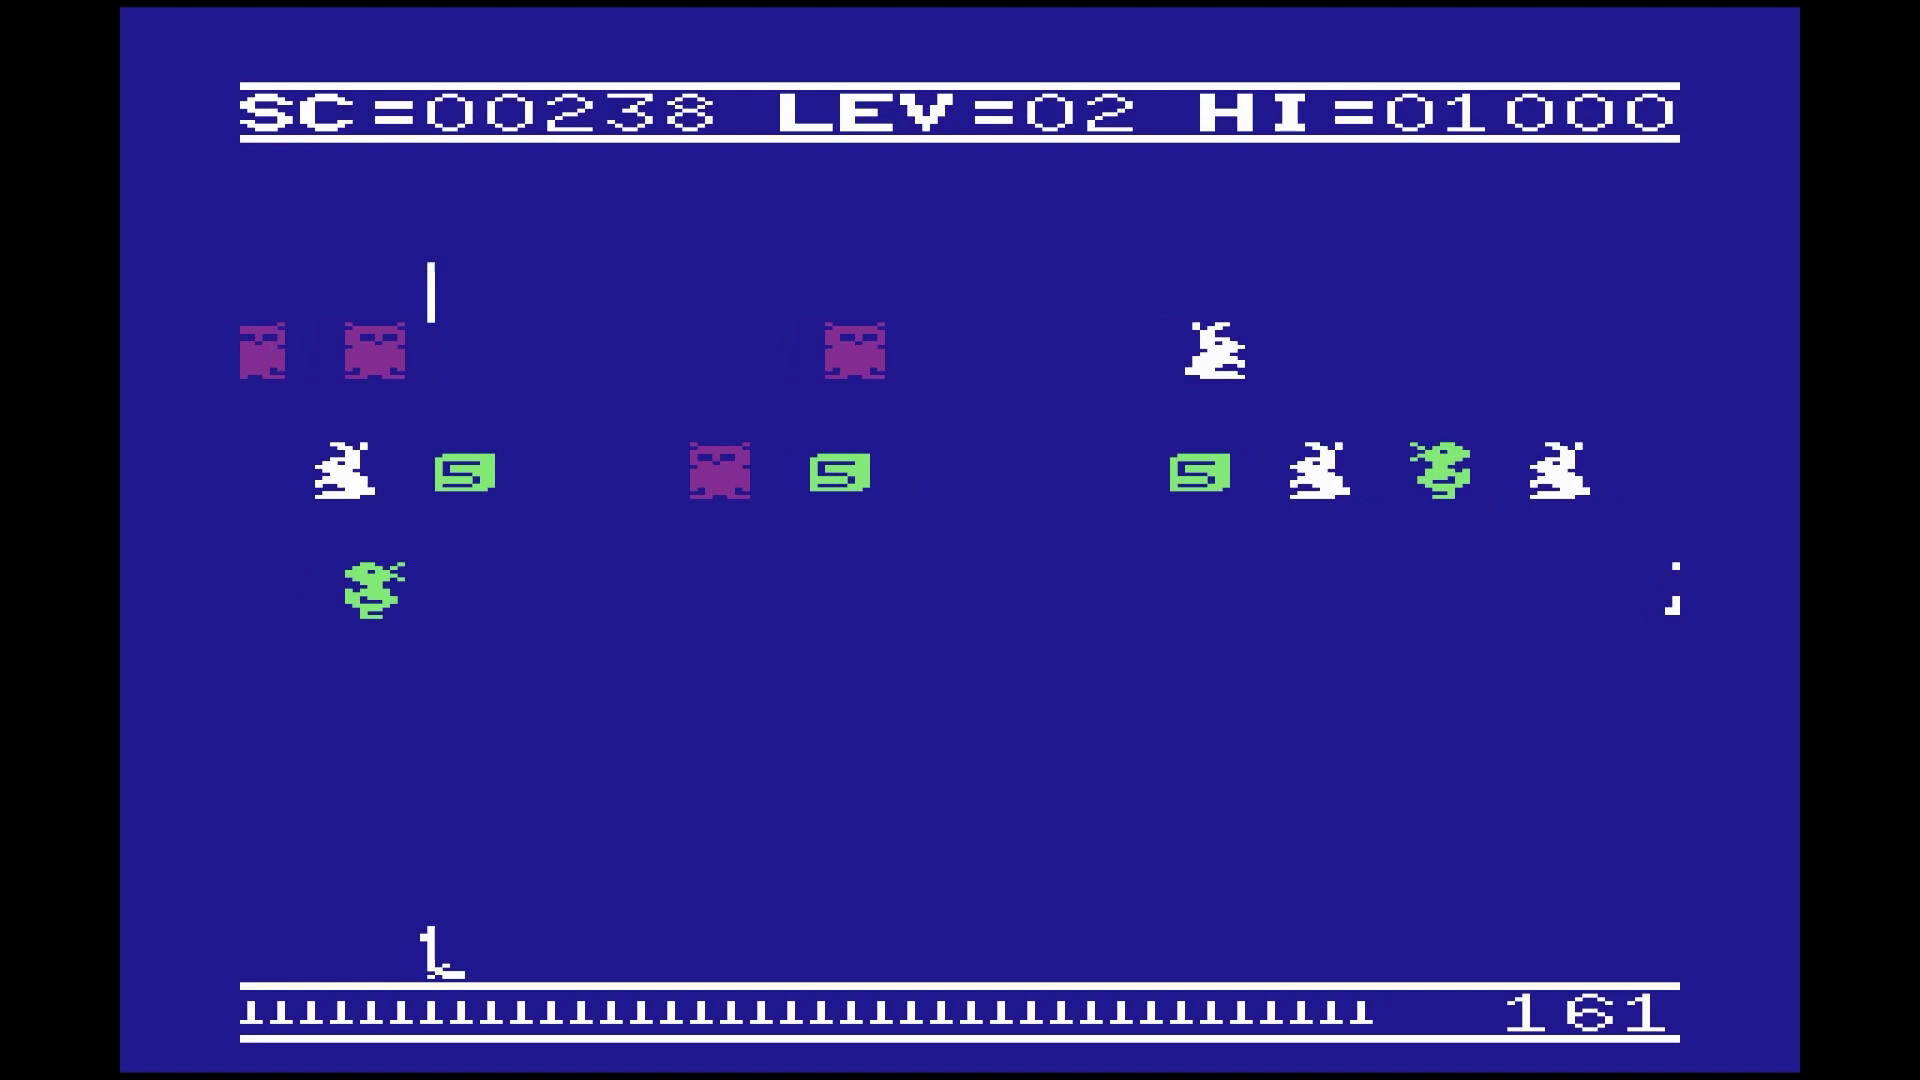 Duck Shoot (C64/VIC-20) screenshot game